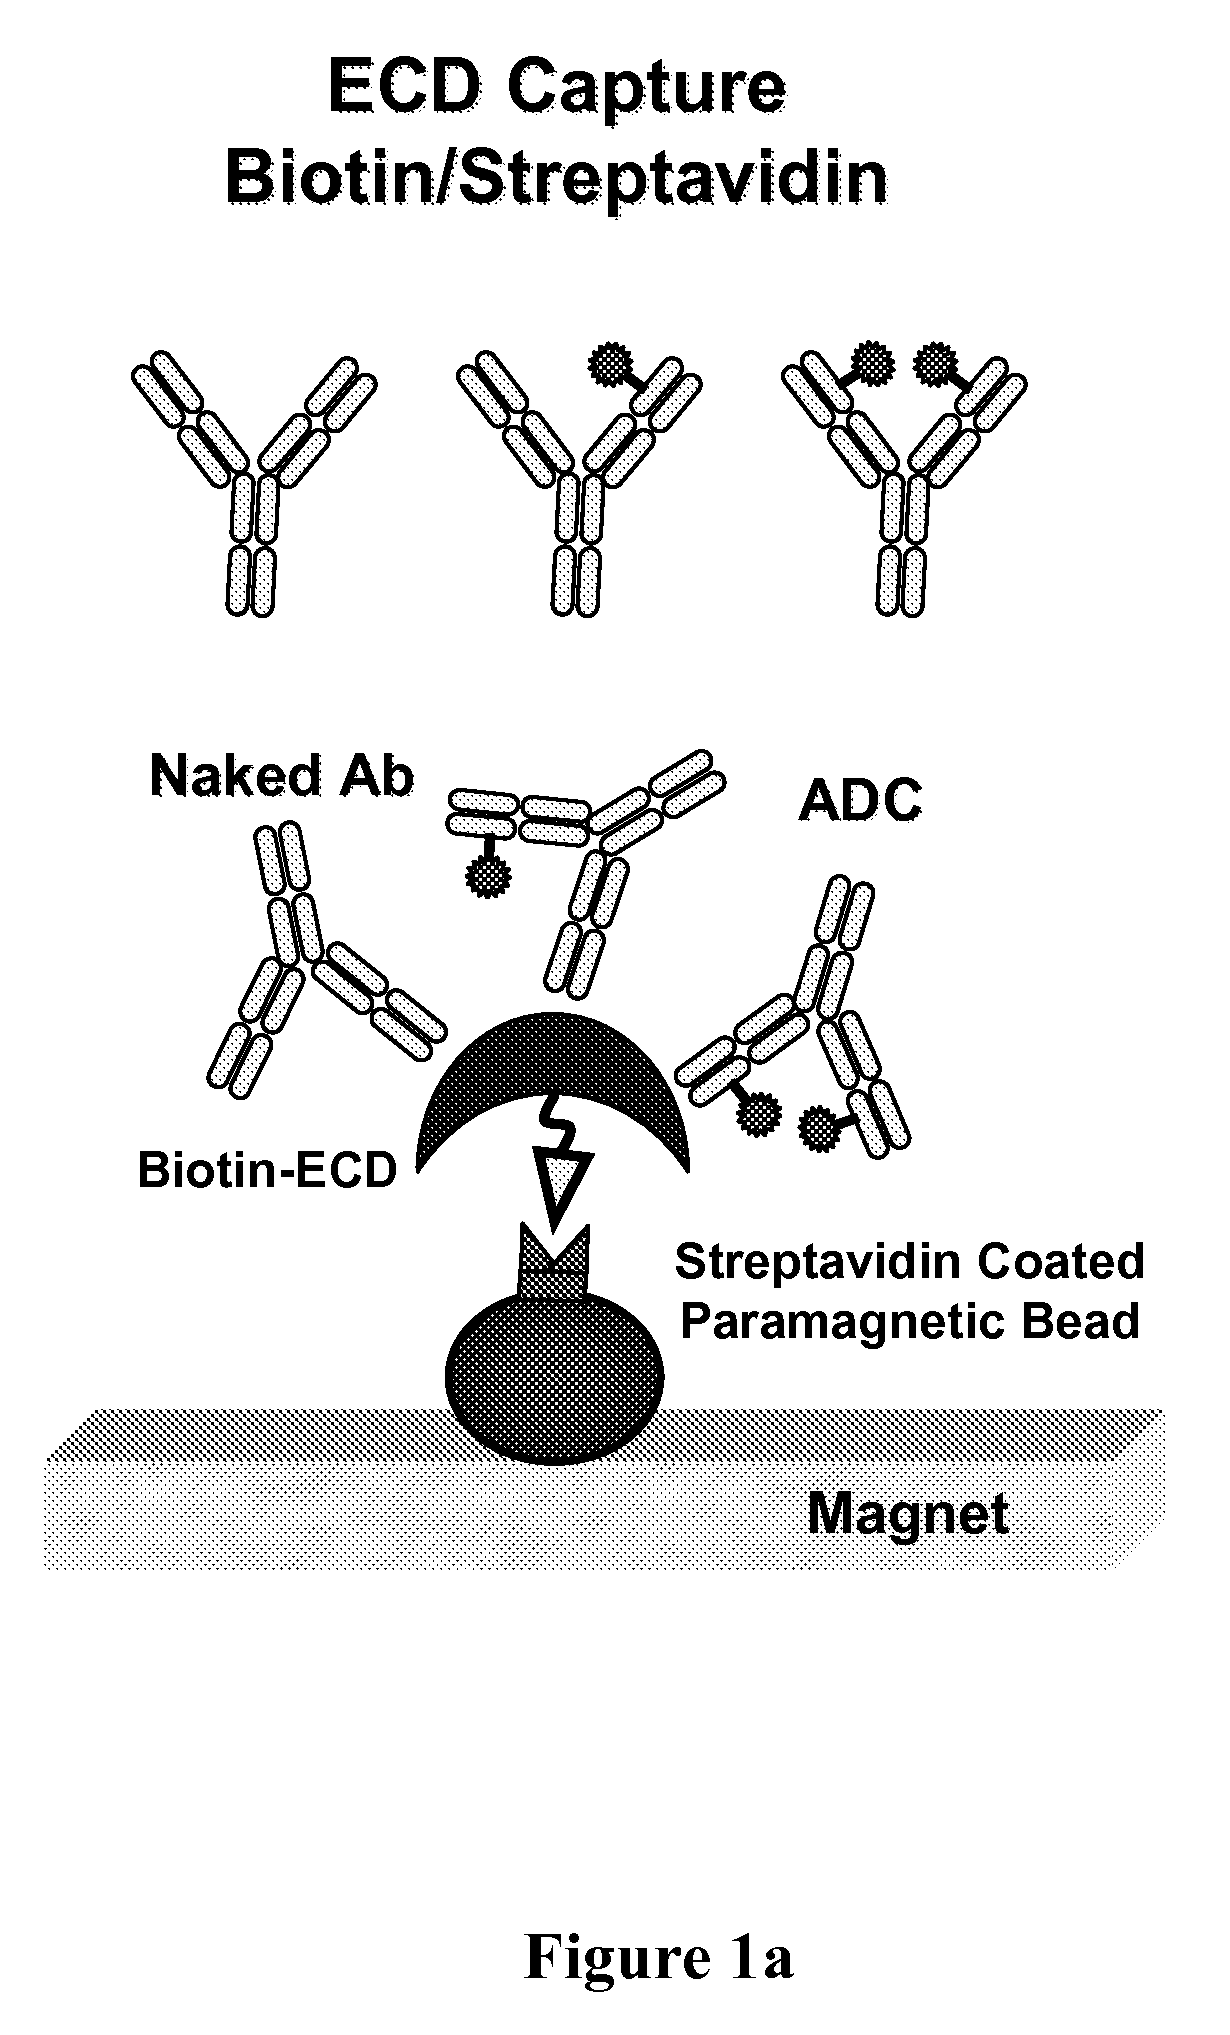 Analysis of antibody drug conjugates by bead-based affinity capture and mass spectrometry